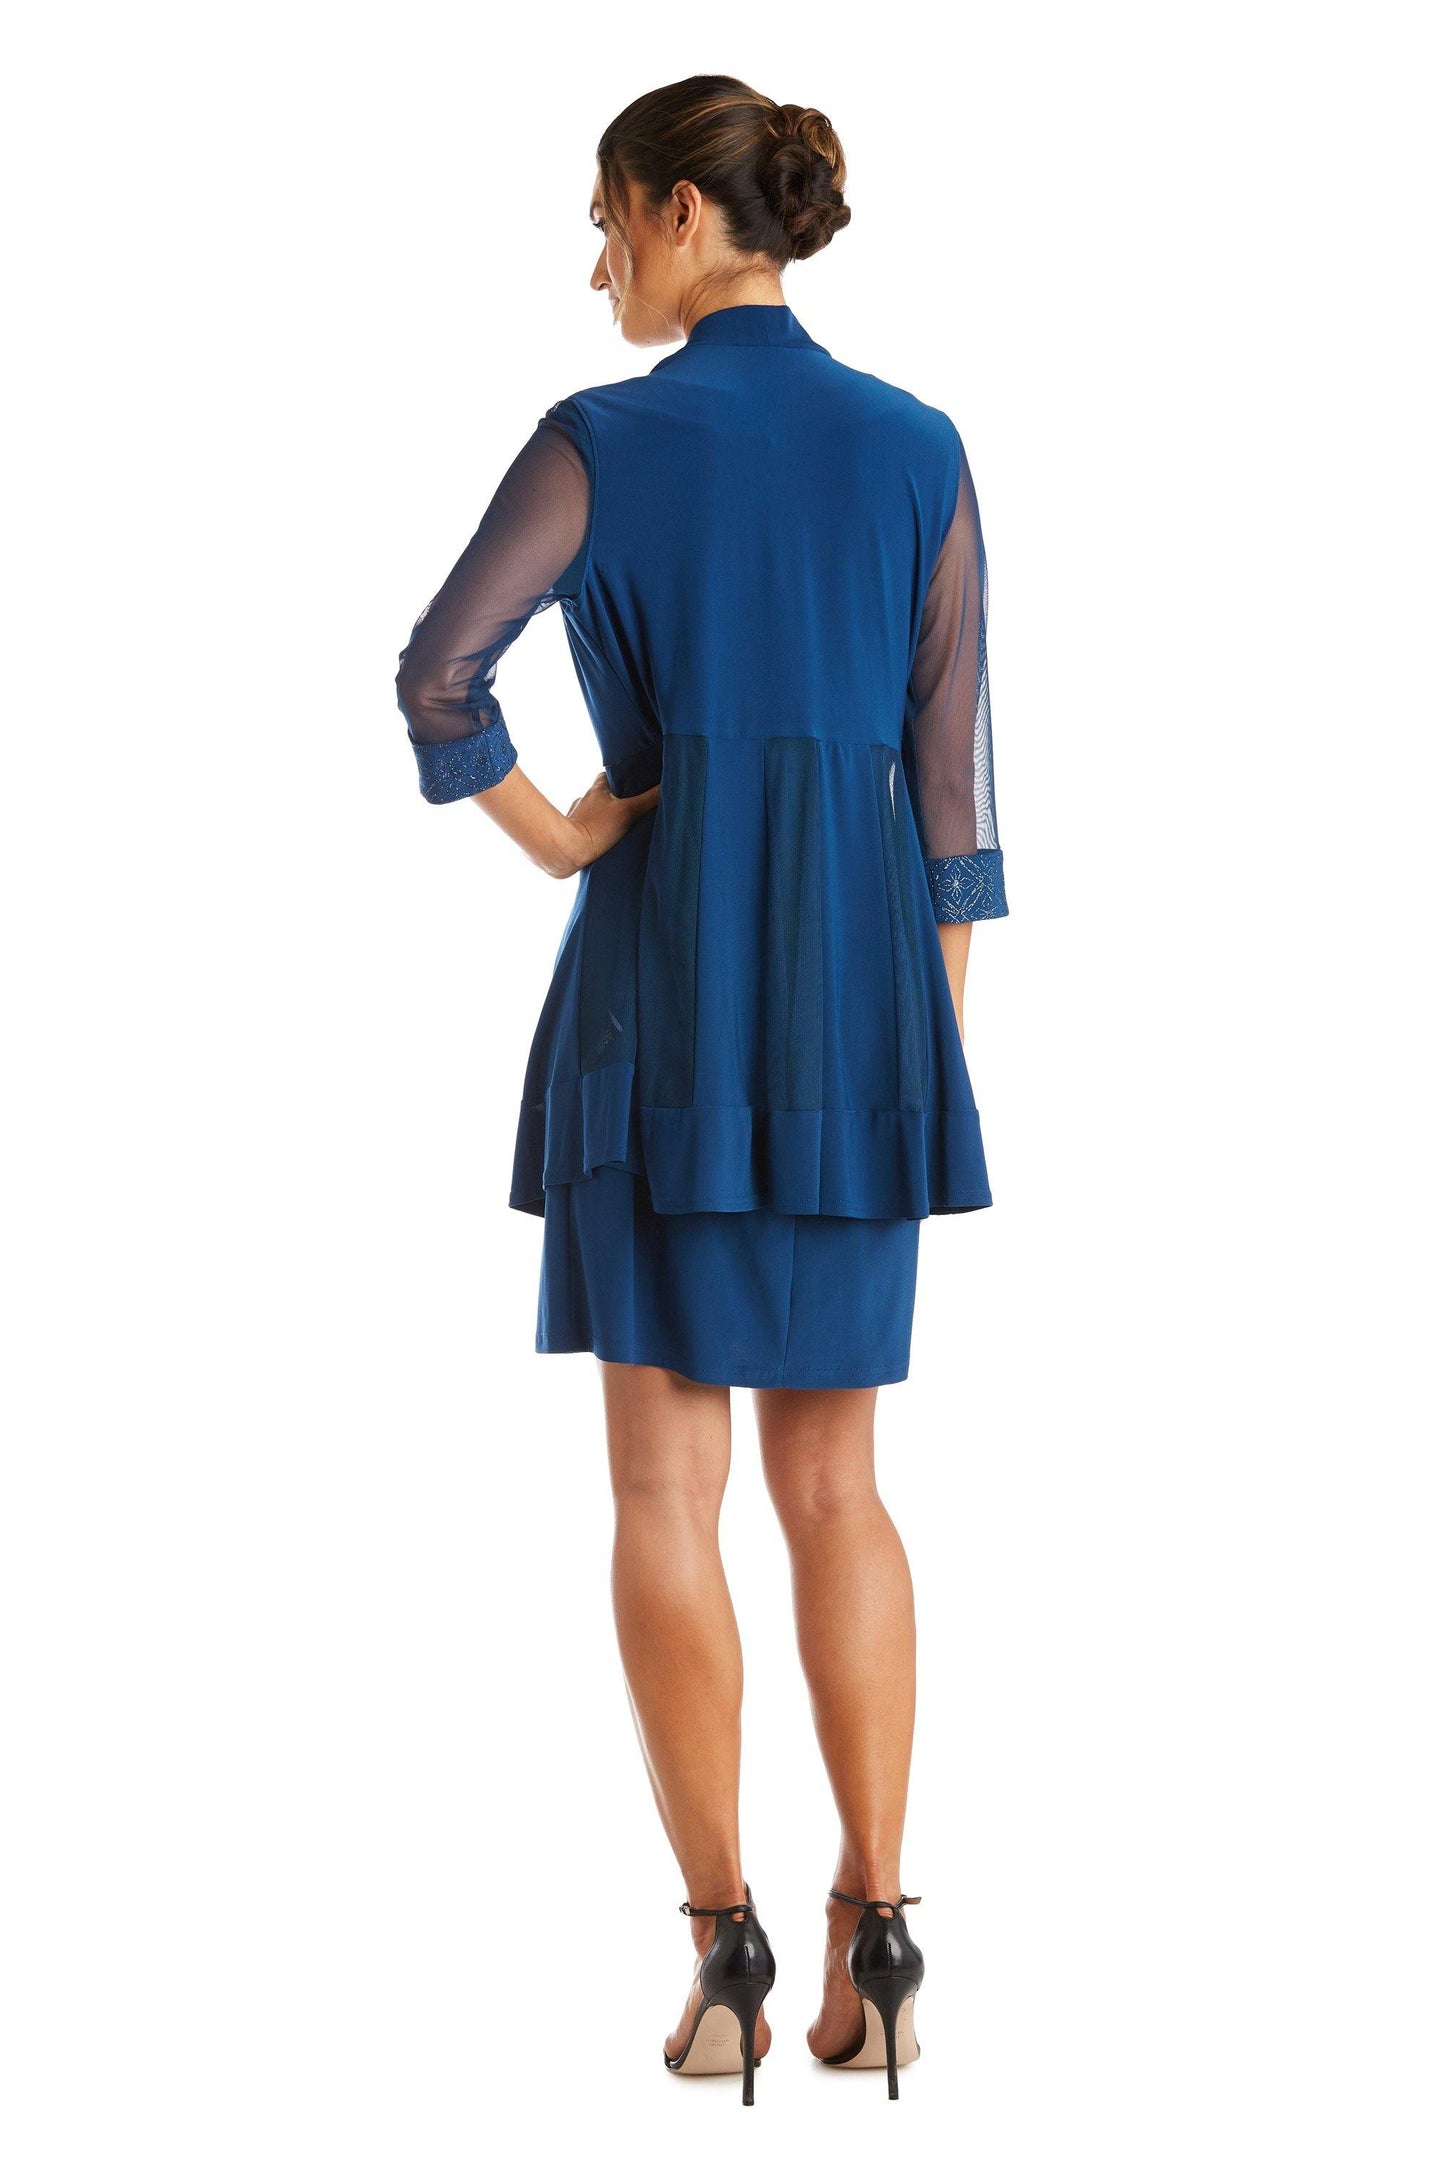 R&M Richards Short Formal Petite Jacket Dress Sale - The Dress Outlet